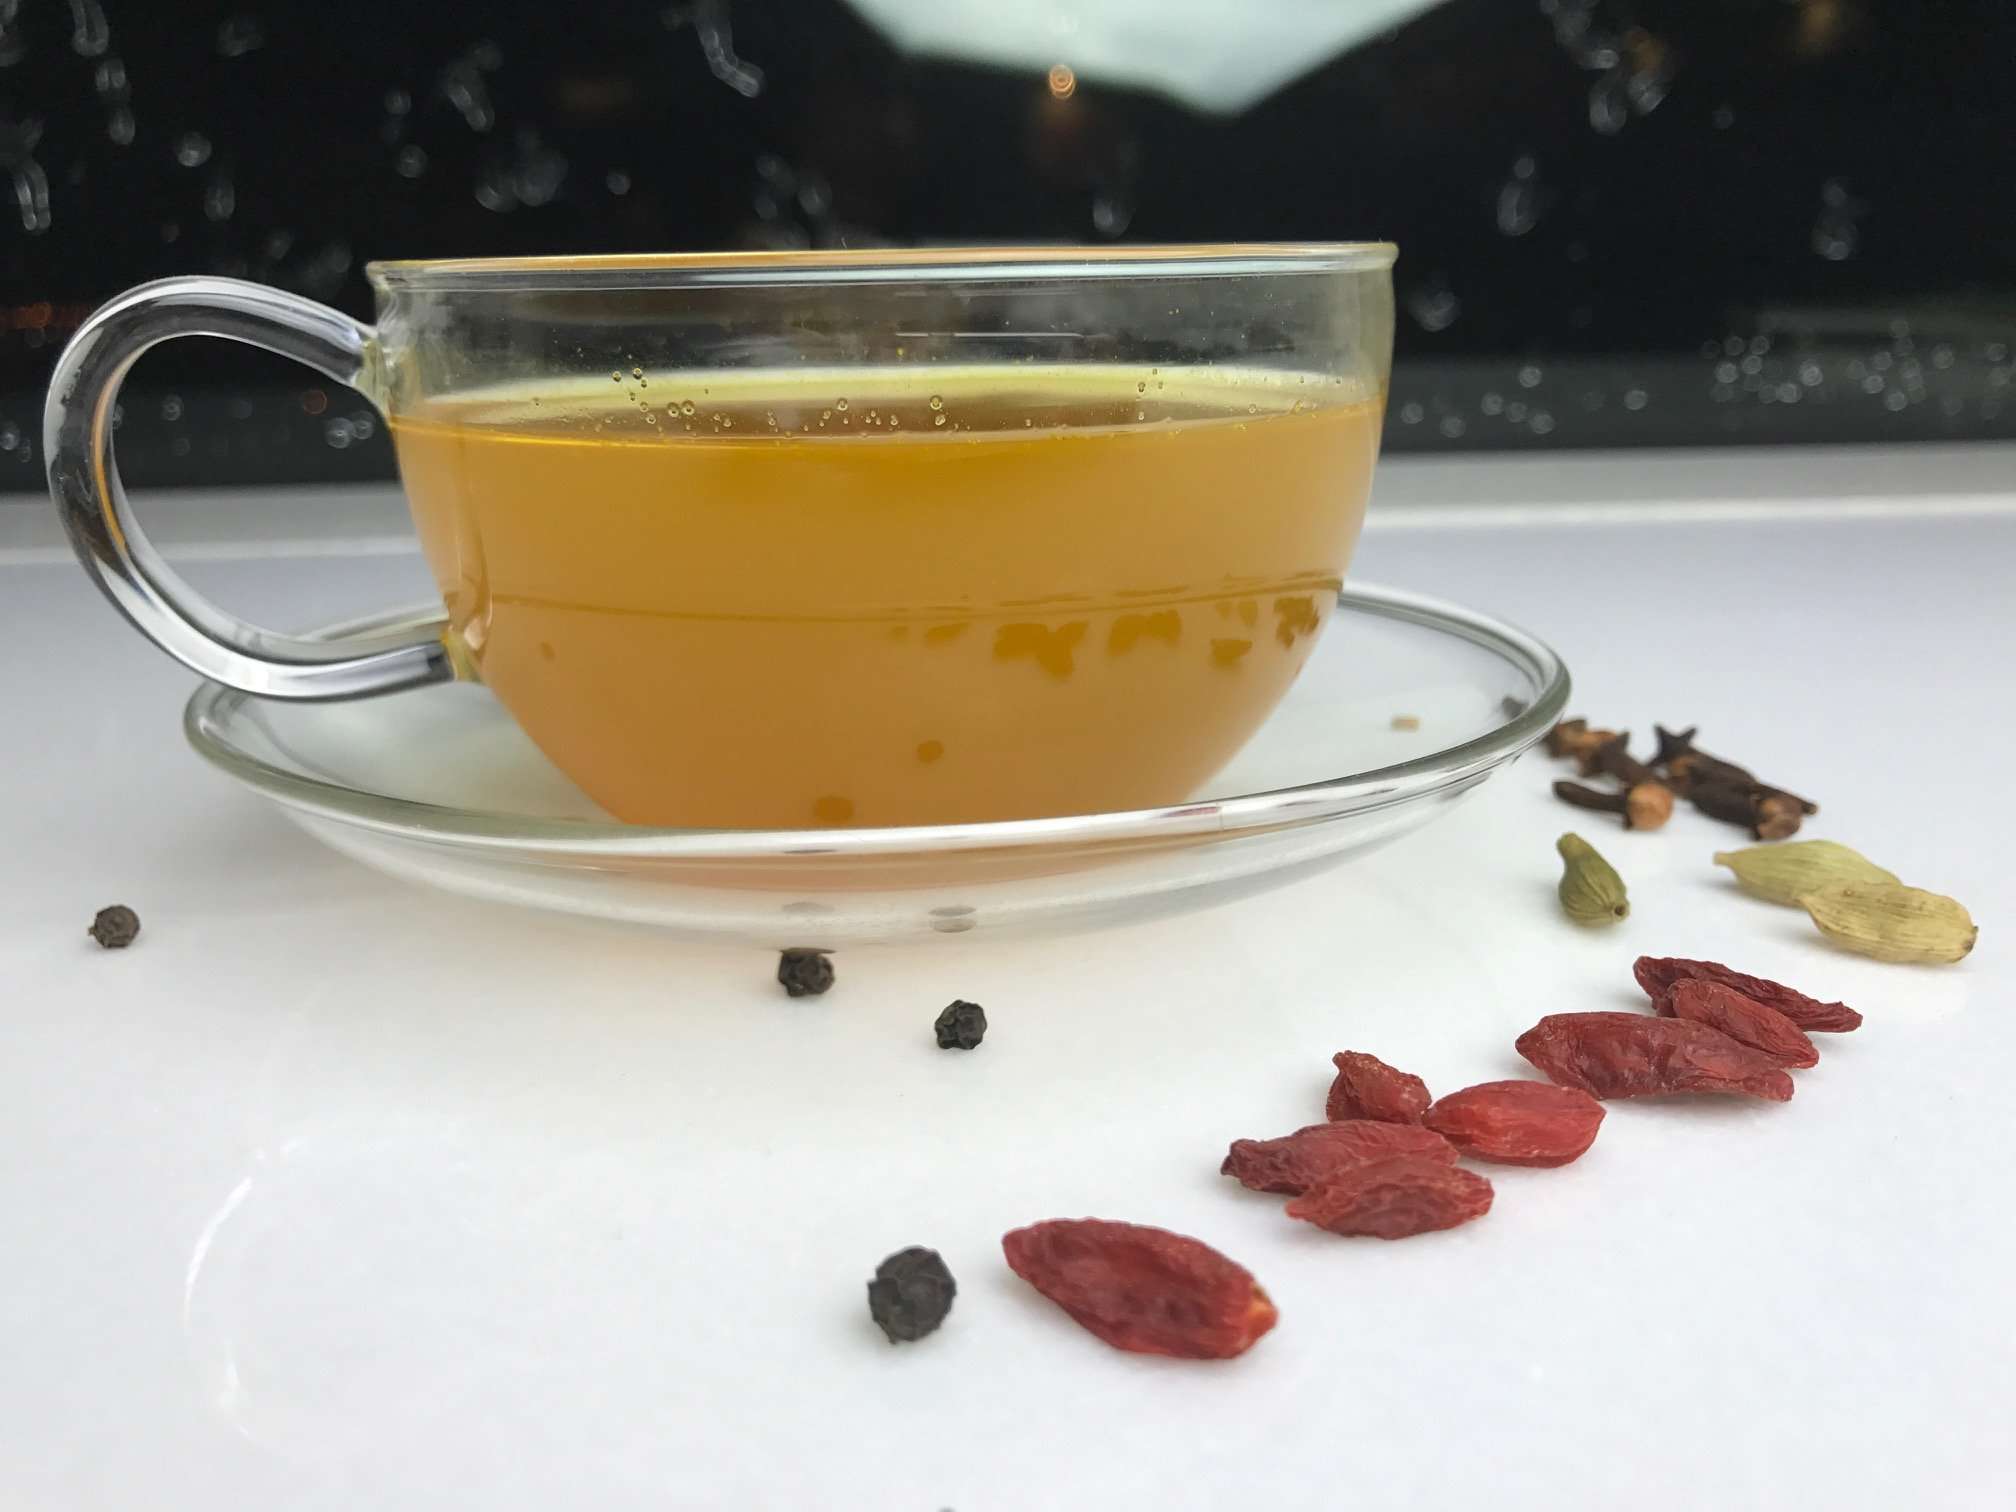 Ginger Turmeric Tea Recipe